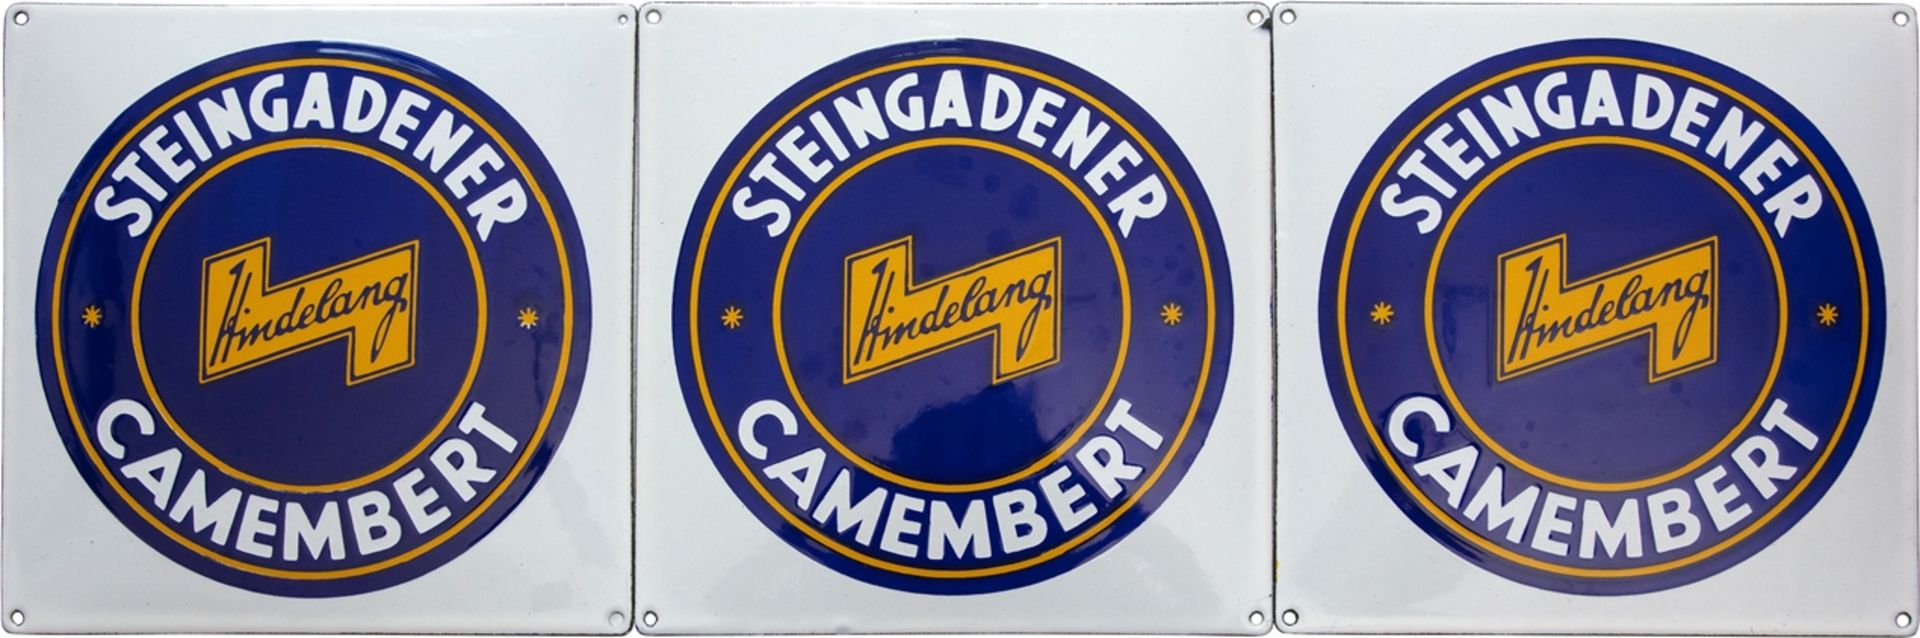 3 enamel signs Steingadener Camembert, Steingaden, around 1930